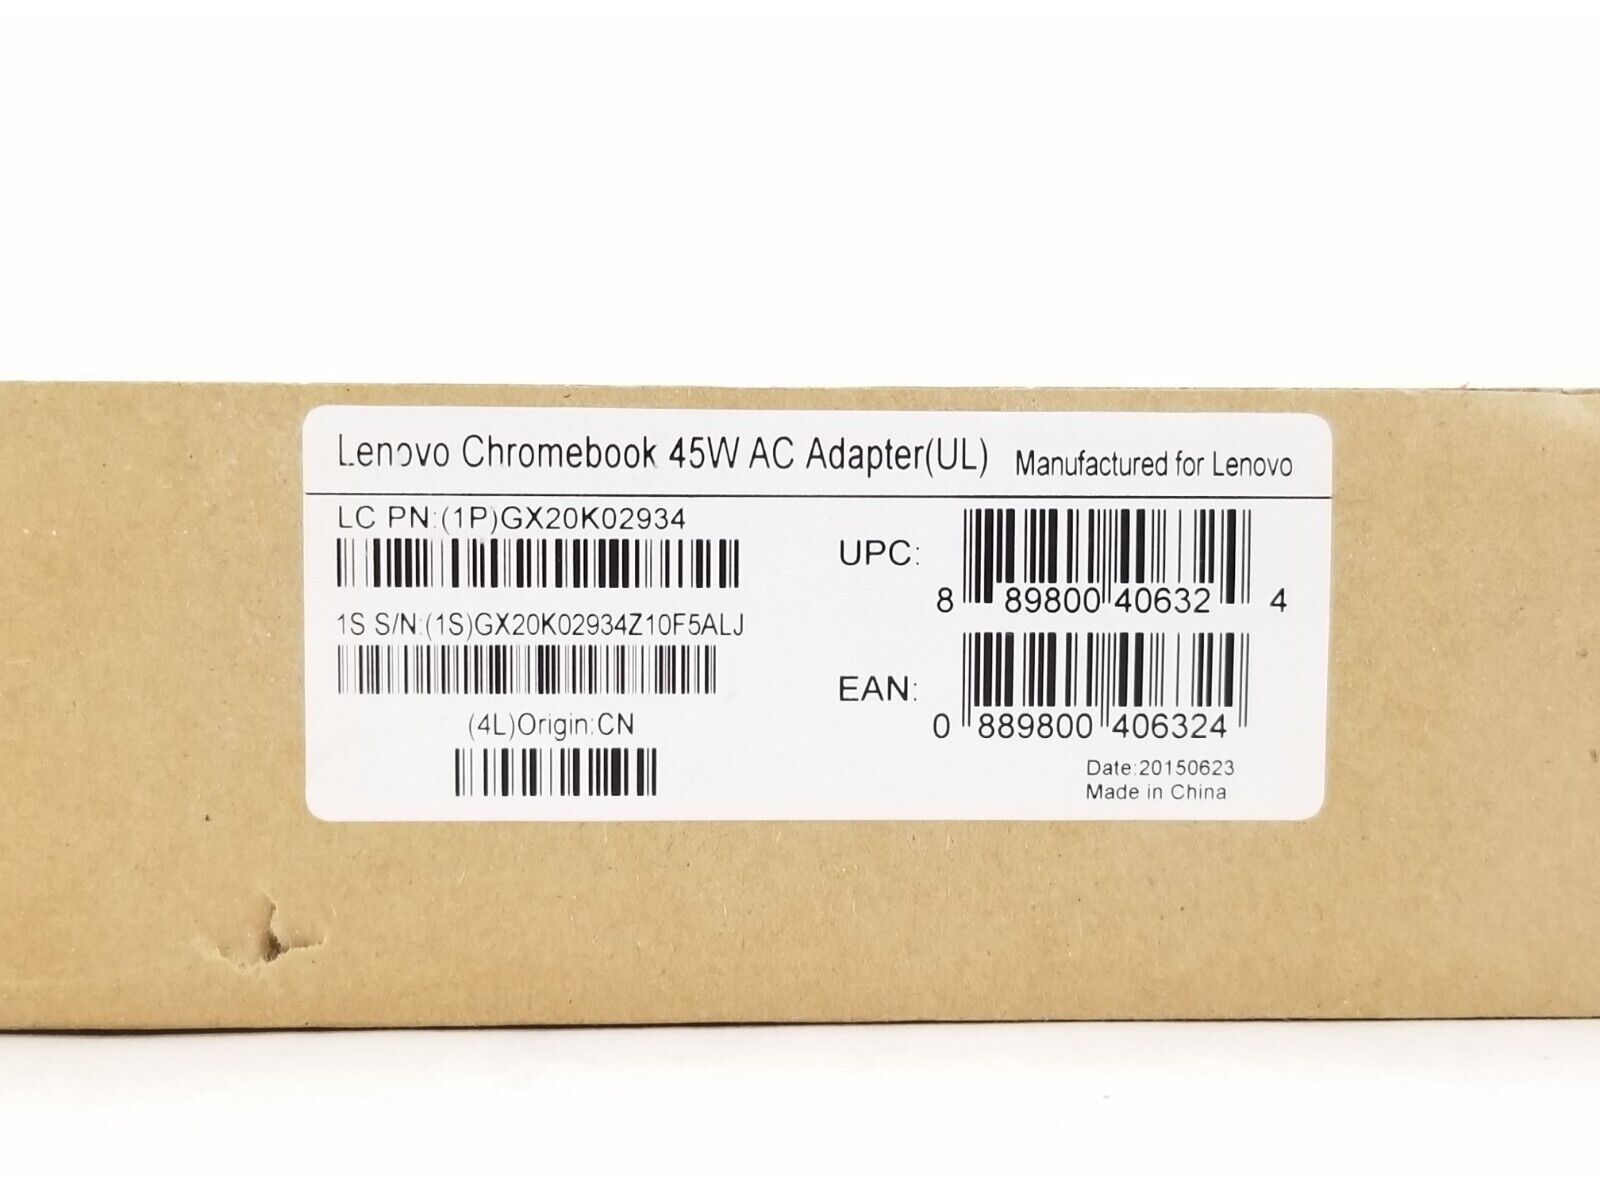 Lenovo Chromebook 45 W AC Adapter(UL)